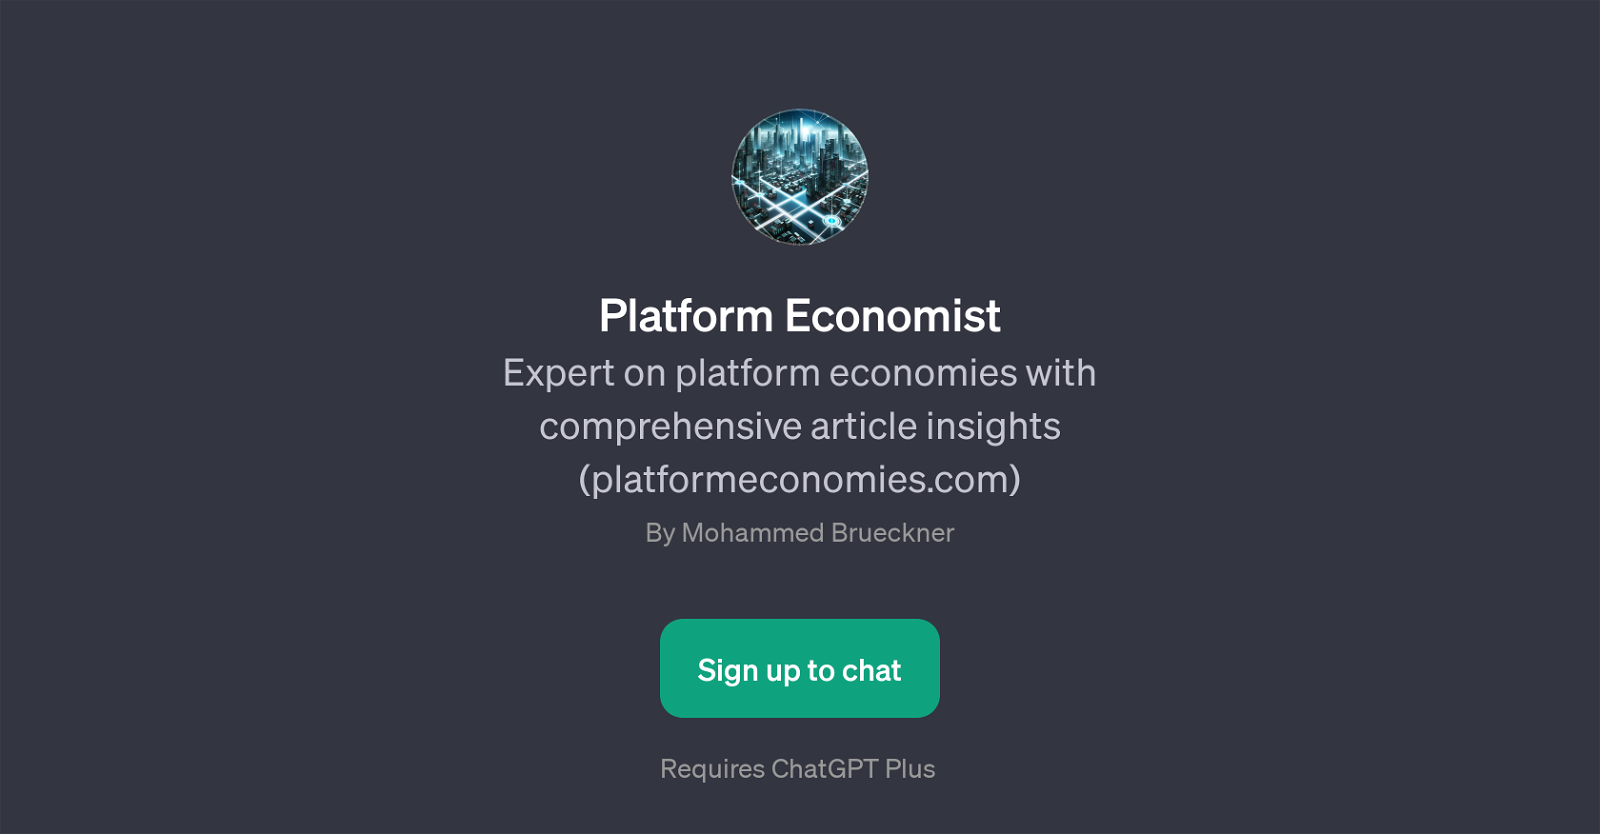 Platform Economist website